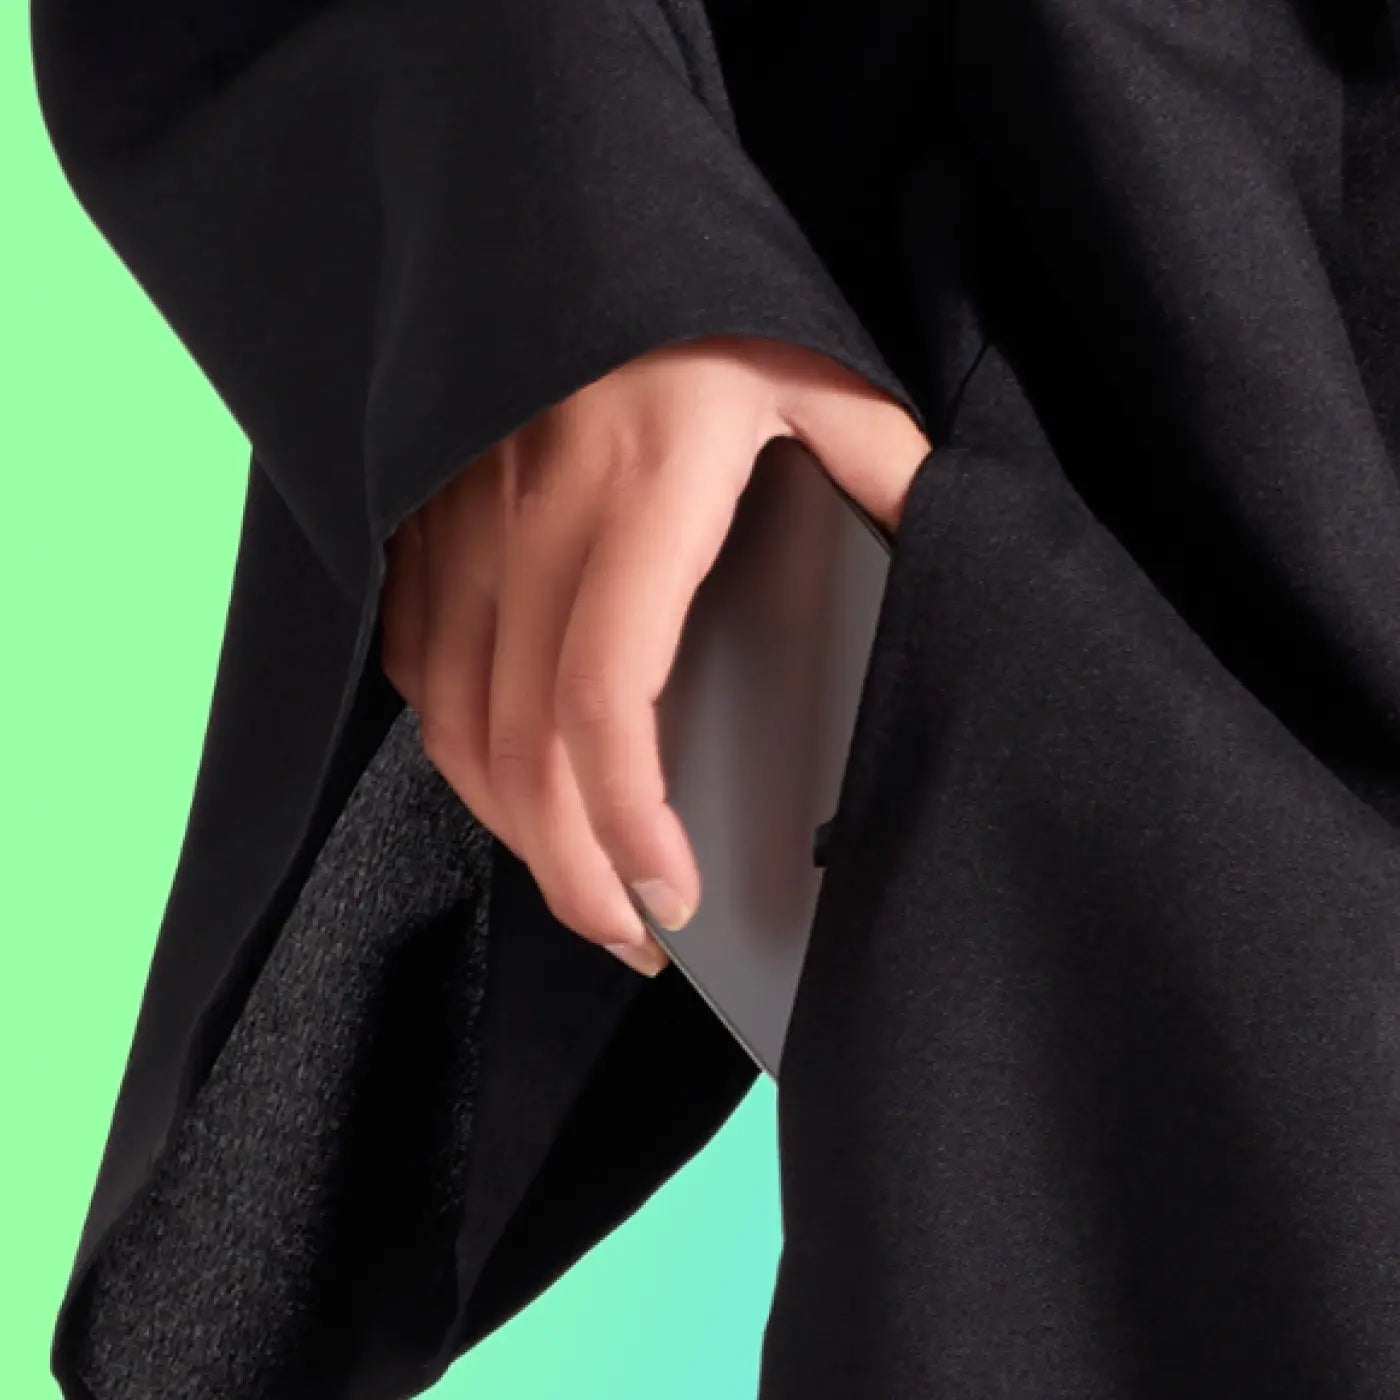 Student putting a phone into the pocket of a graduation regalia robe